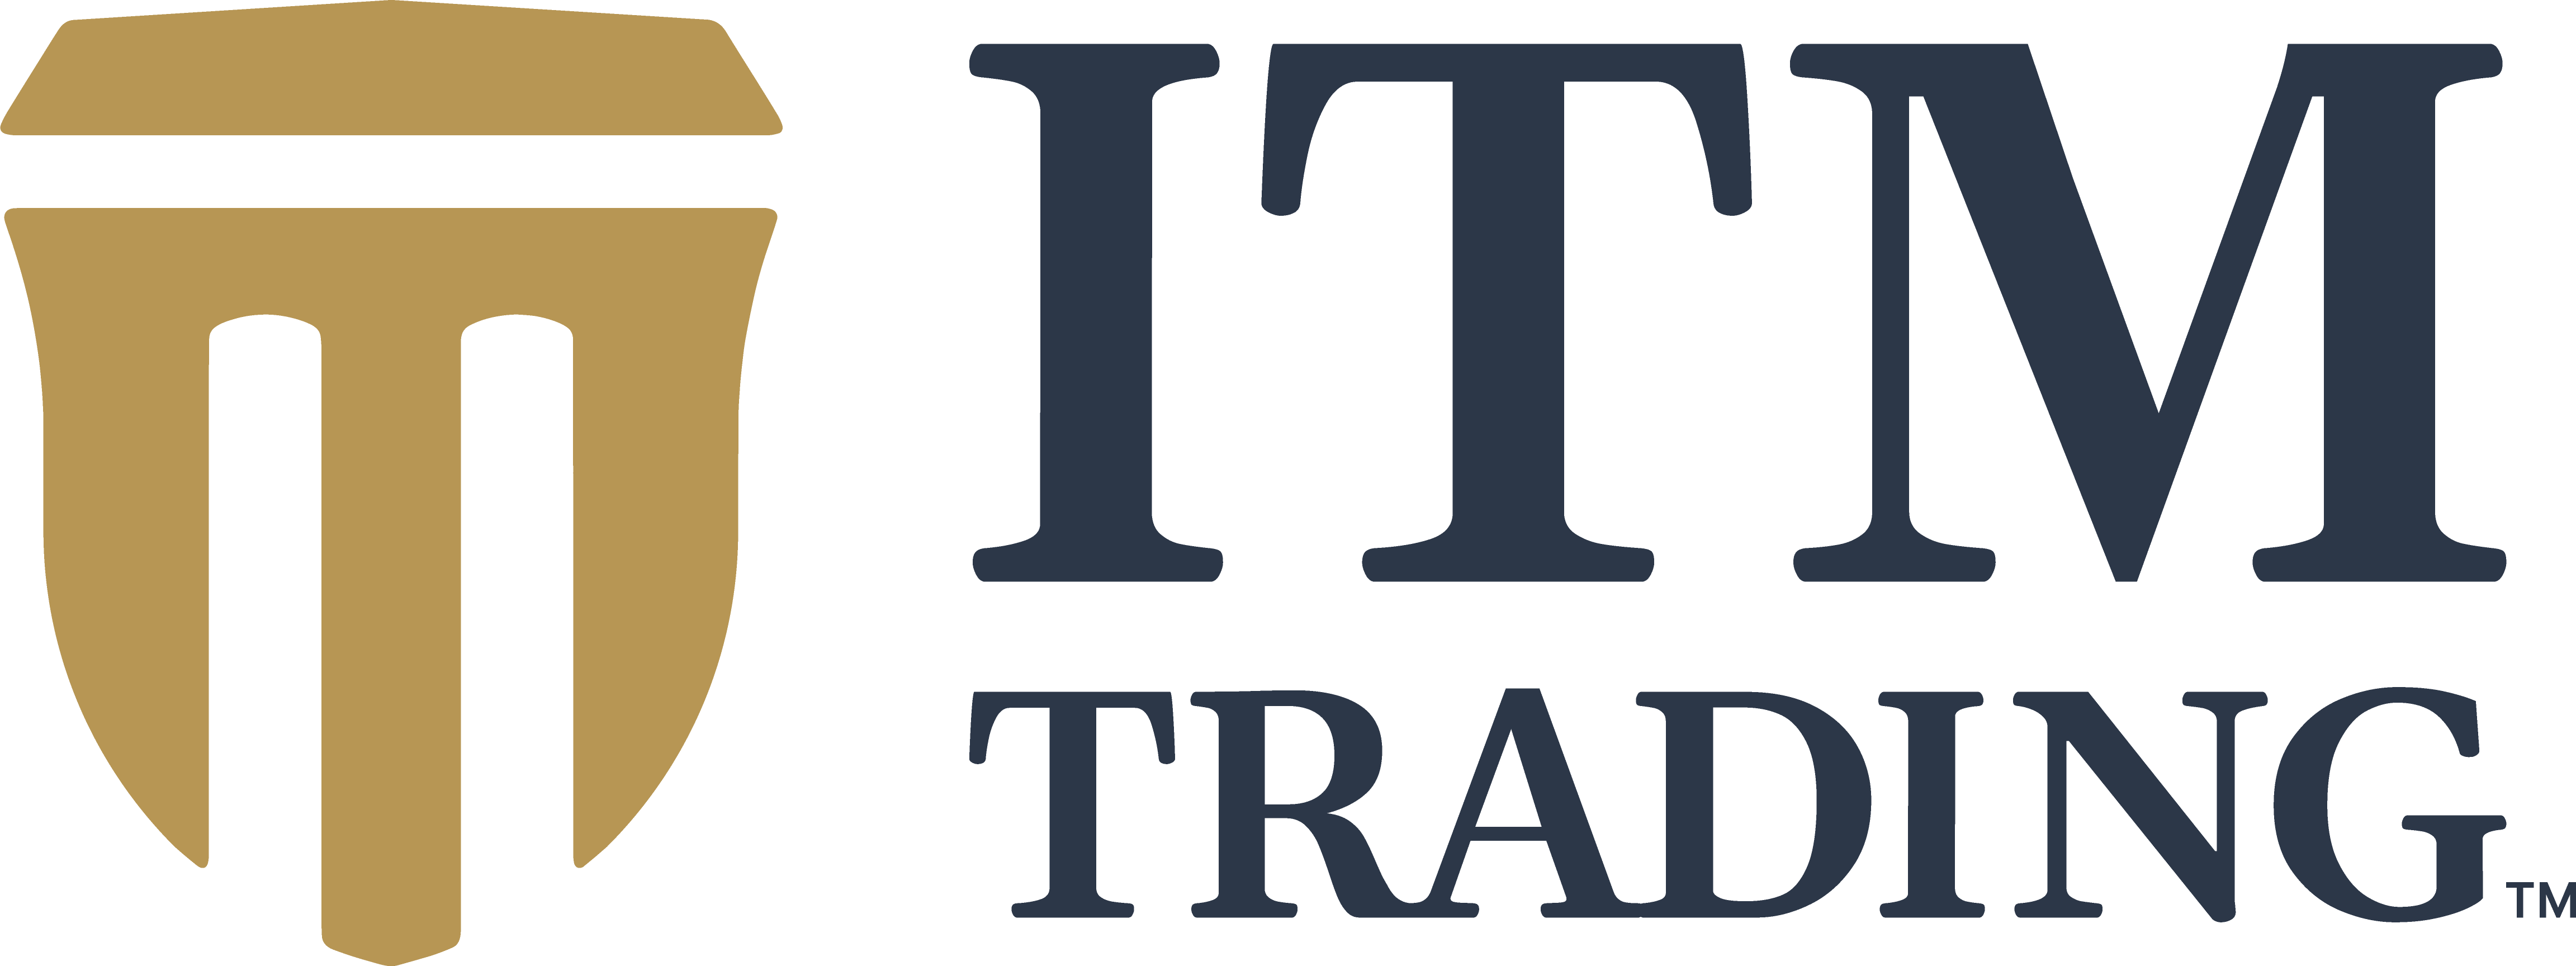 itm trading logo